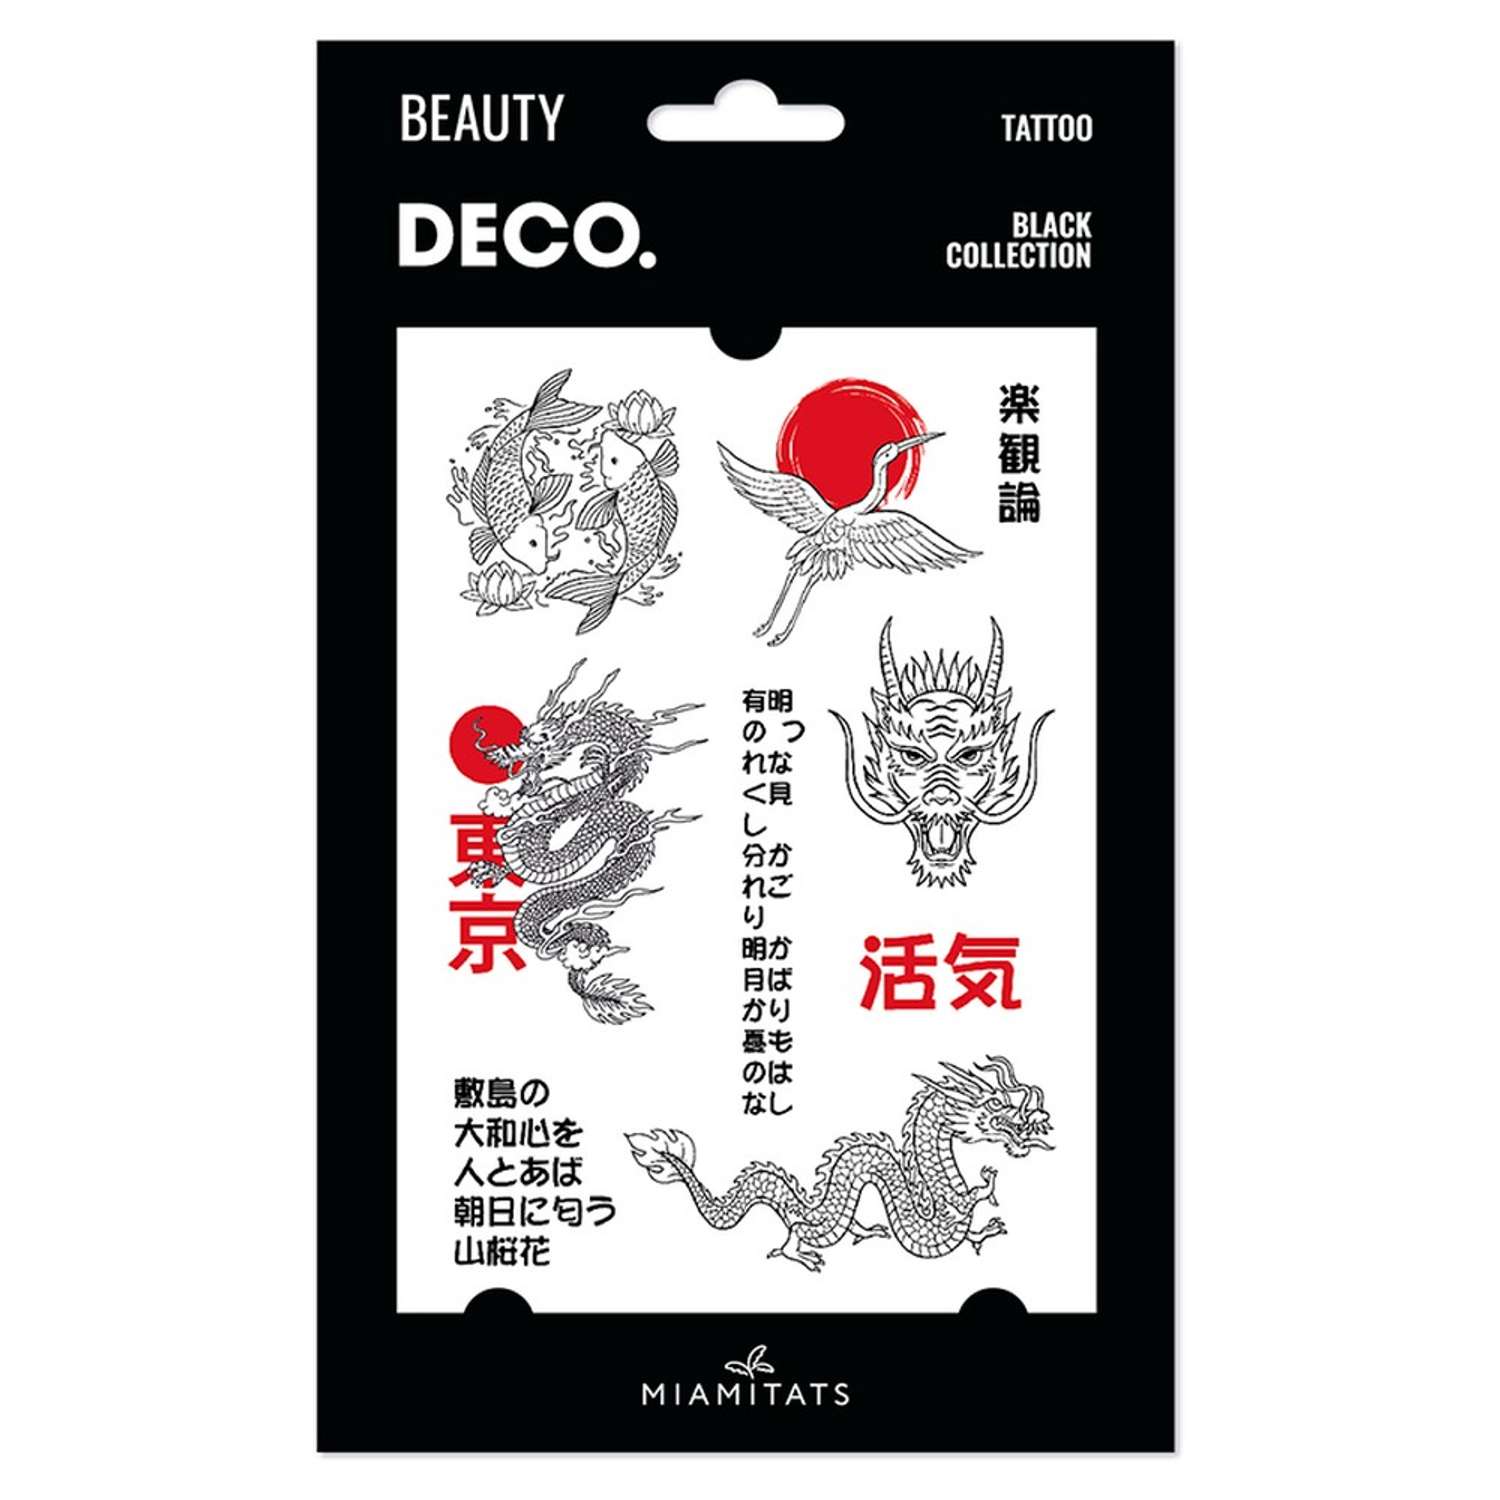 Татуировка для тела DECO. Black collection by miami tattoos переводная (japan style) - фото 1